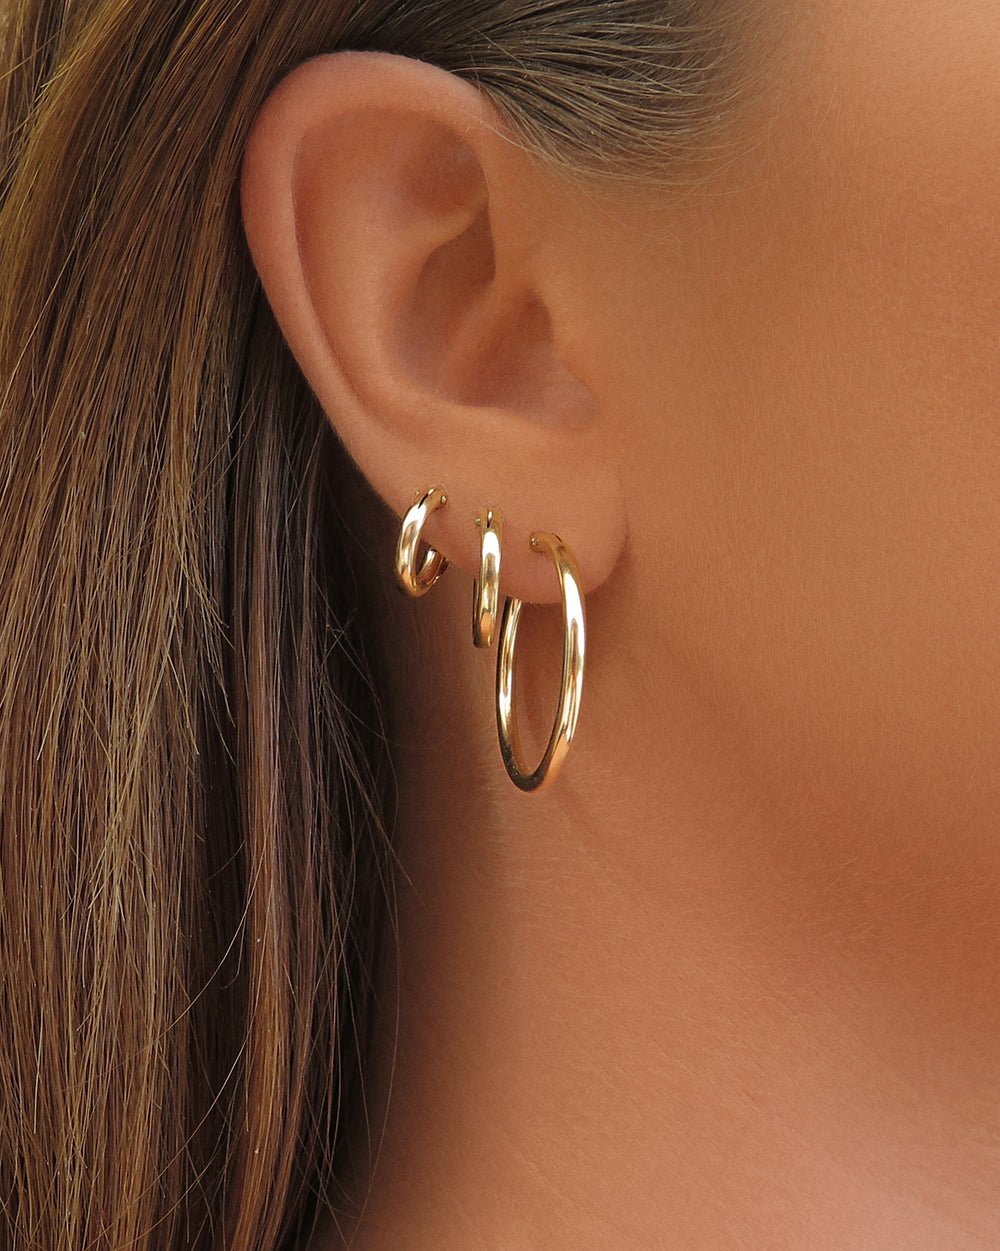 THICK HOOP EARRINGS- 14k Yellow Gold - The Littl - 14k Yellow Gold Fill - 12mm Earrings